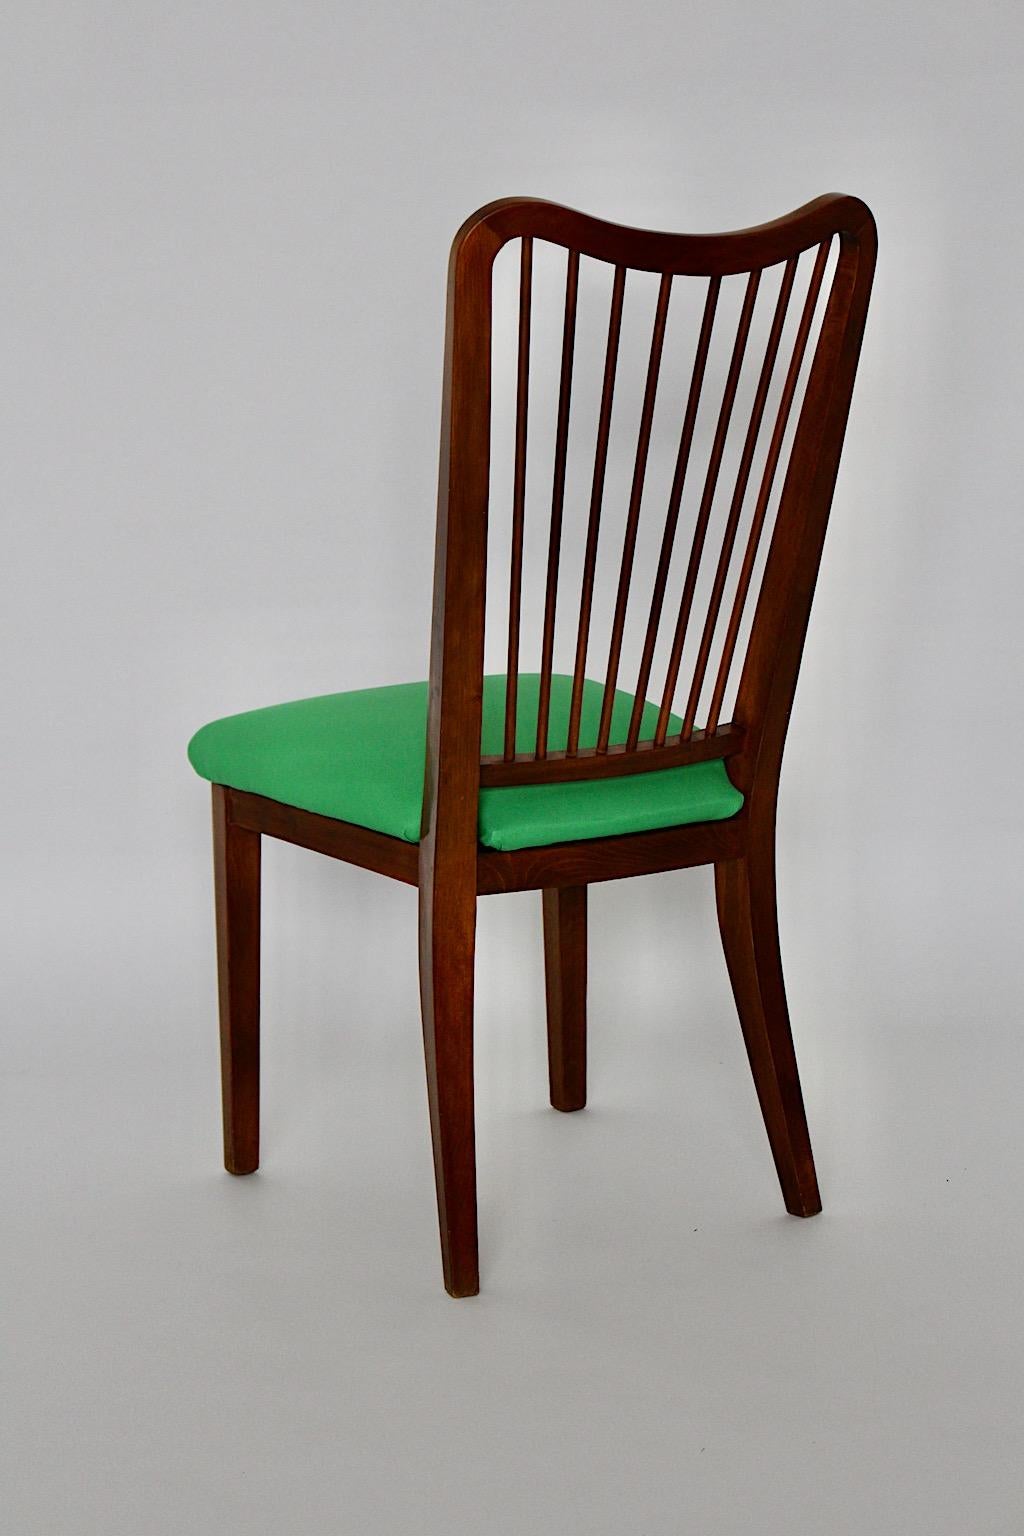 20th Century Mid-Century Modern Green Oswald Haerdtl Office Chair Side Chair Beech, 1950s For Sale